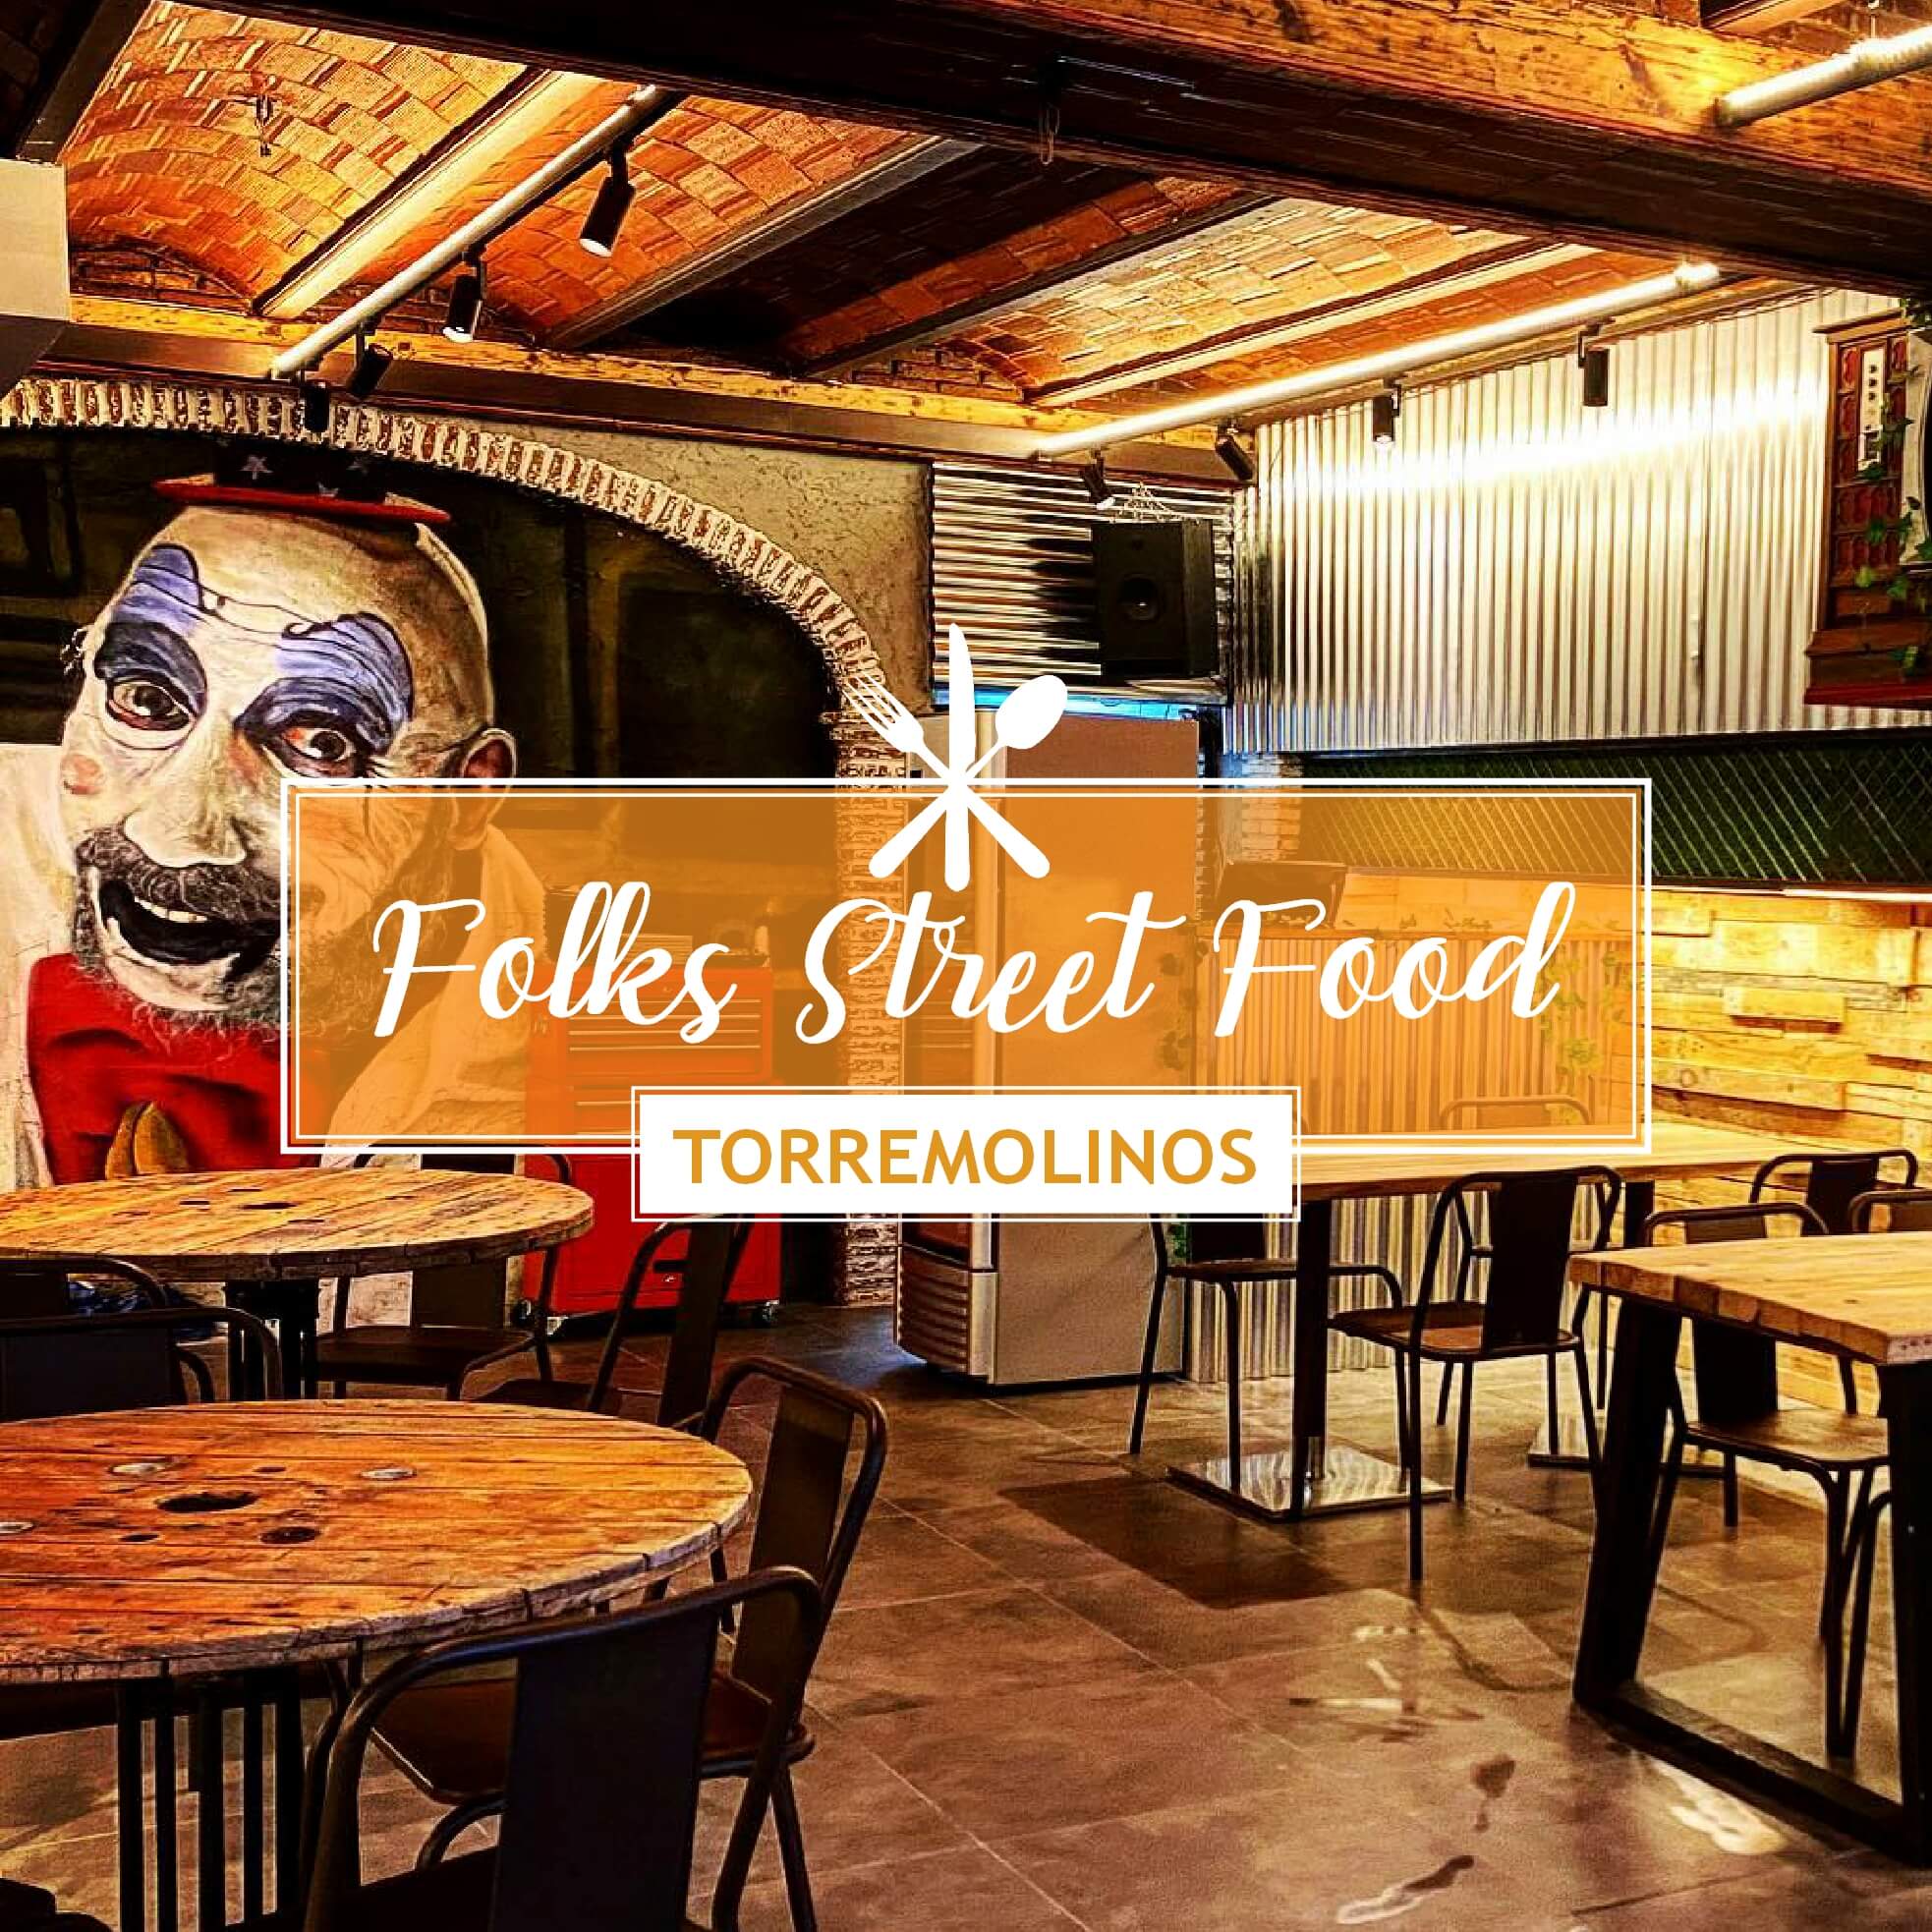 Folks Street Food Torremolinos Malaga